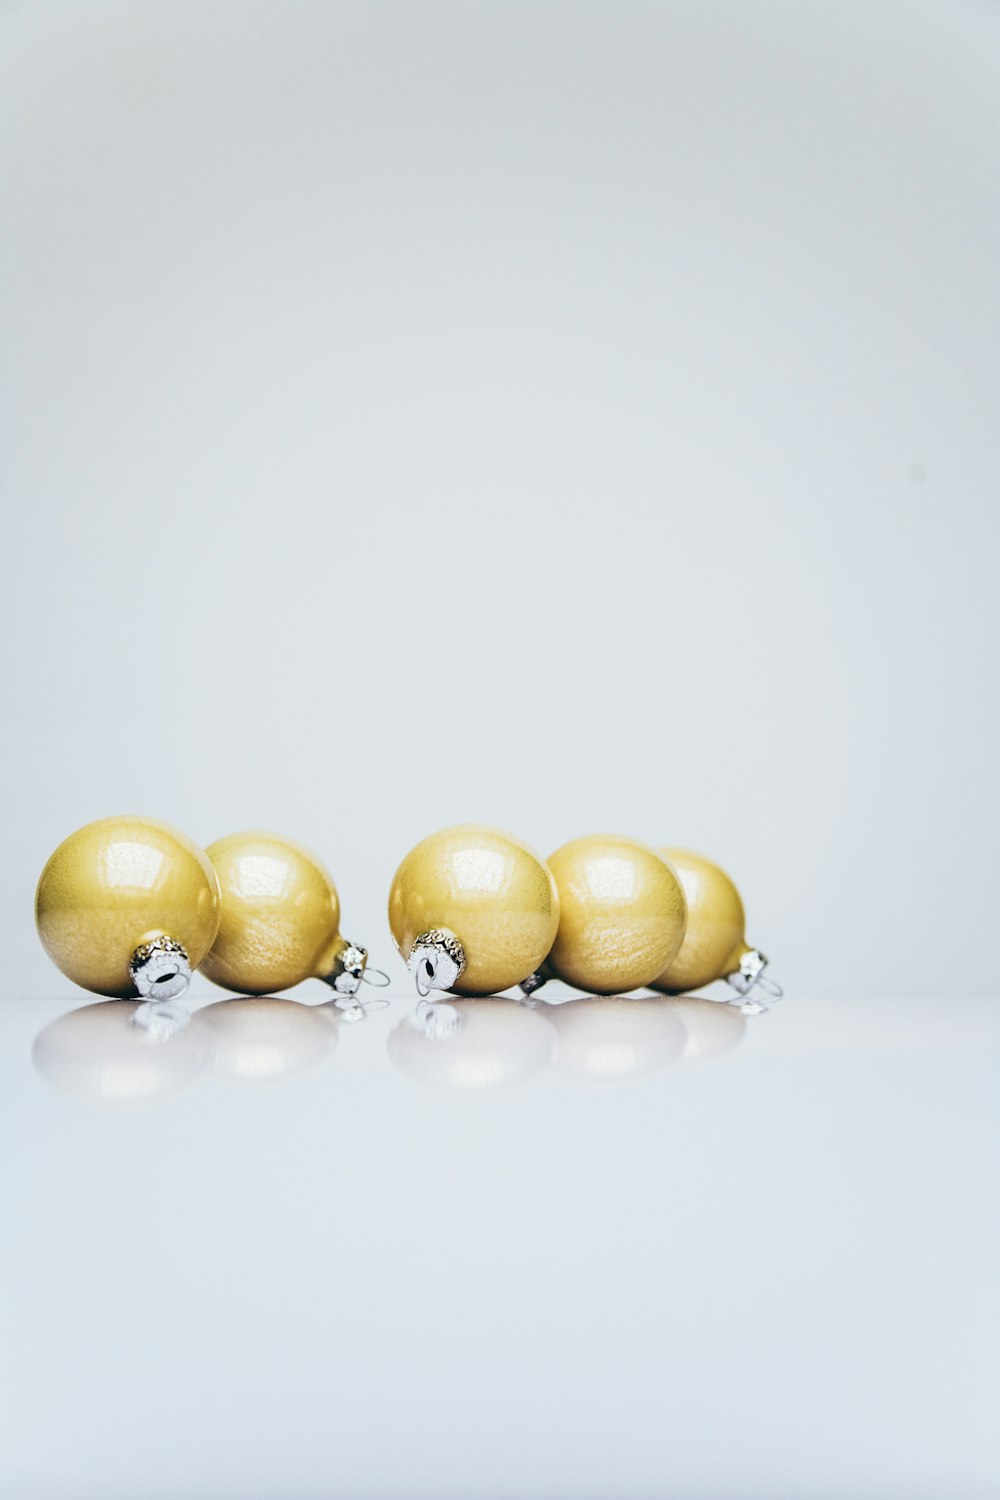 seis bolas de Navidad doradas sobre una superficie de madera blanca